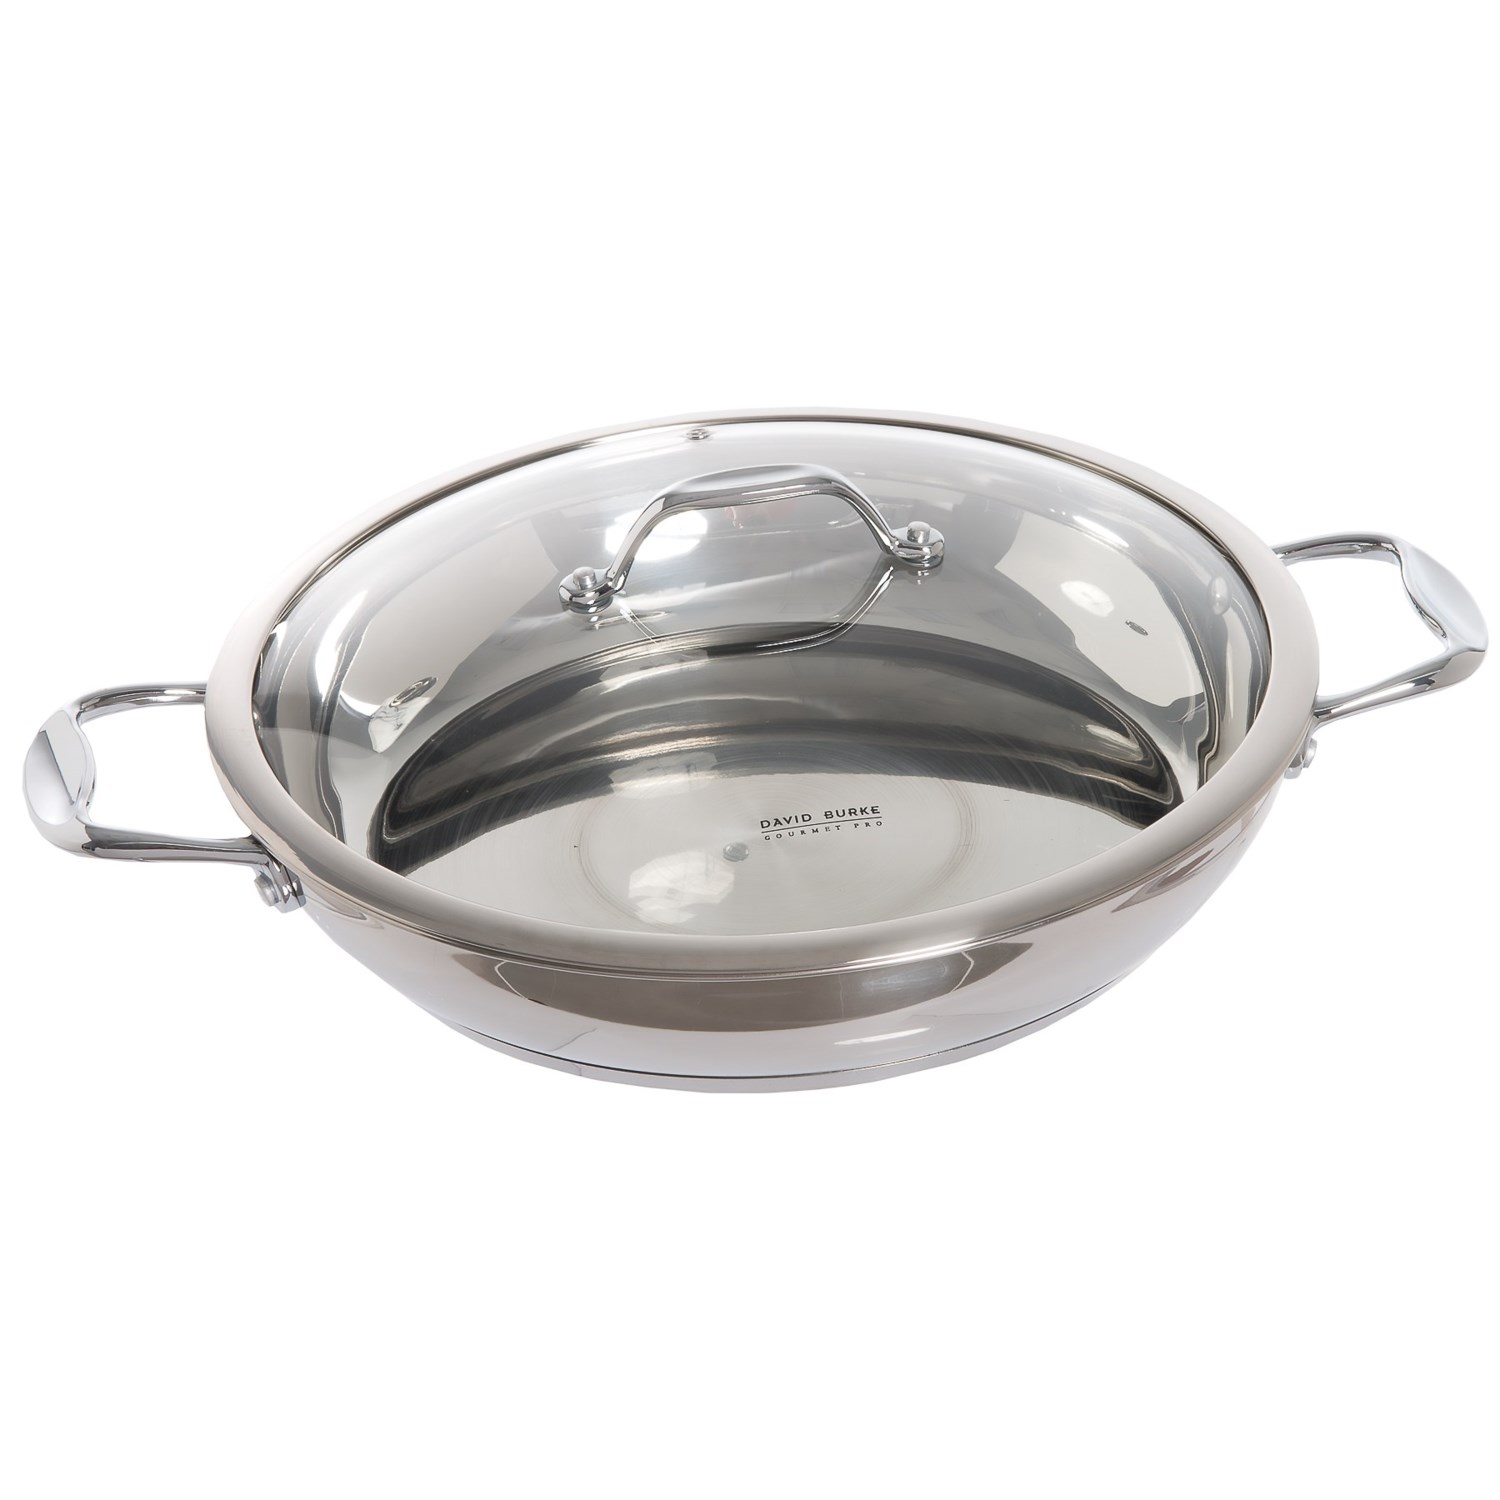 David Burke Gourmet Pro Splendor Everyday Pan with Lid - 12.5” - Save 42% David Burke Cookware Stainless Steel